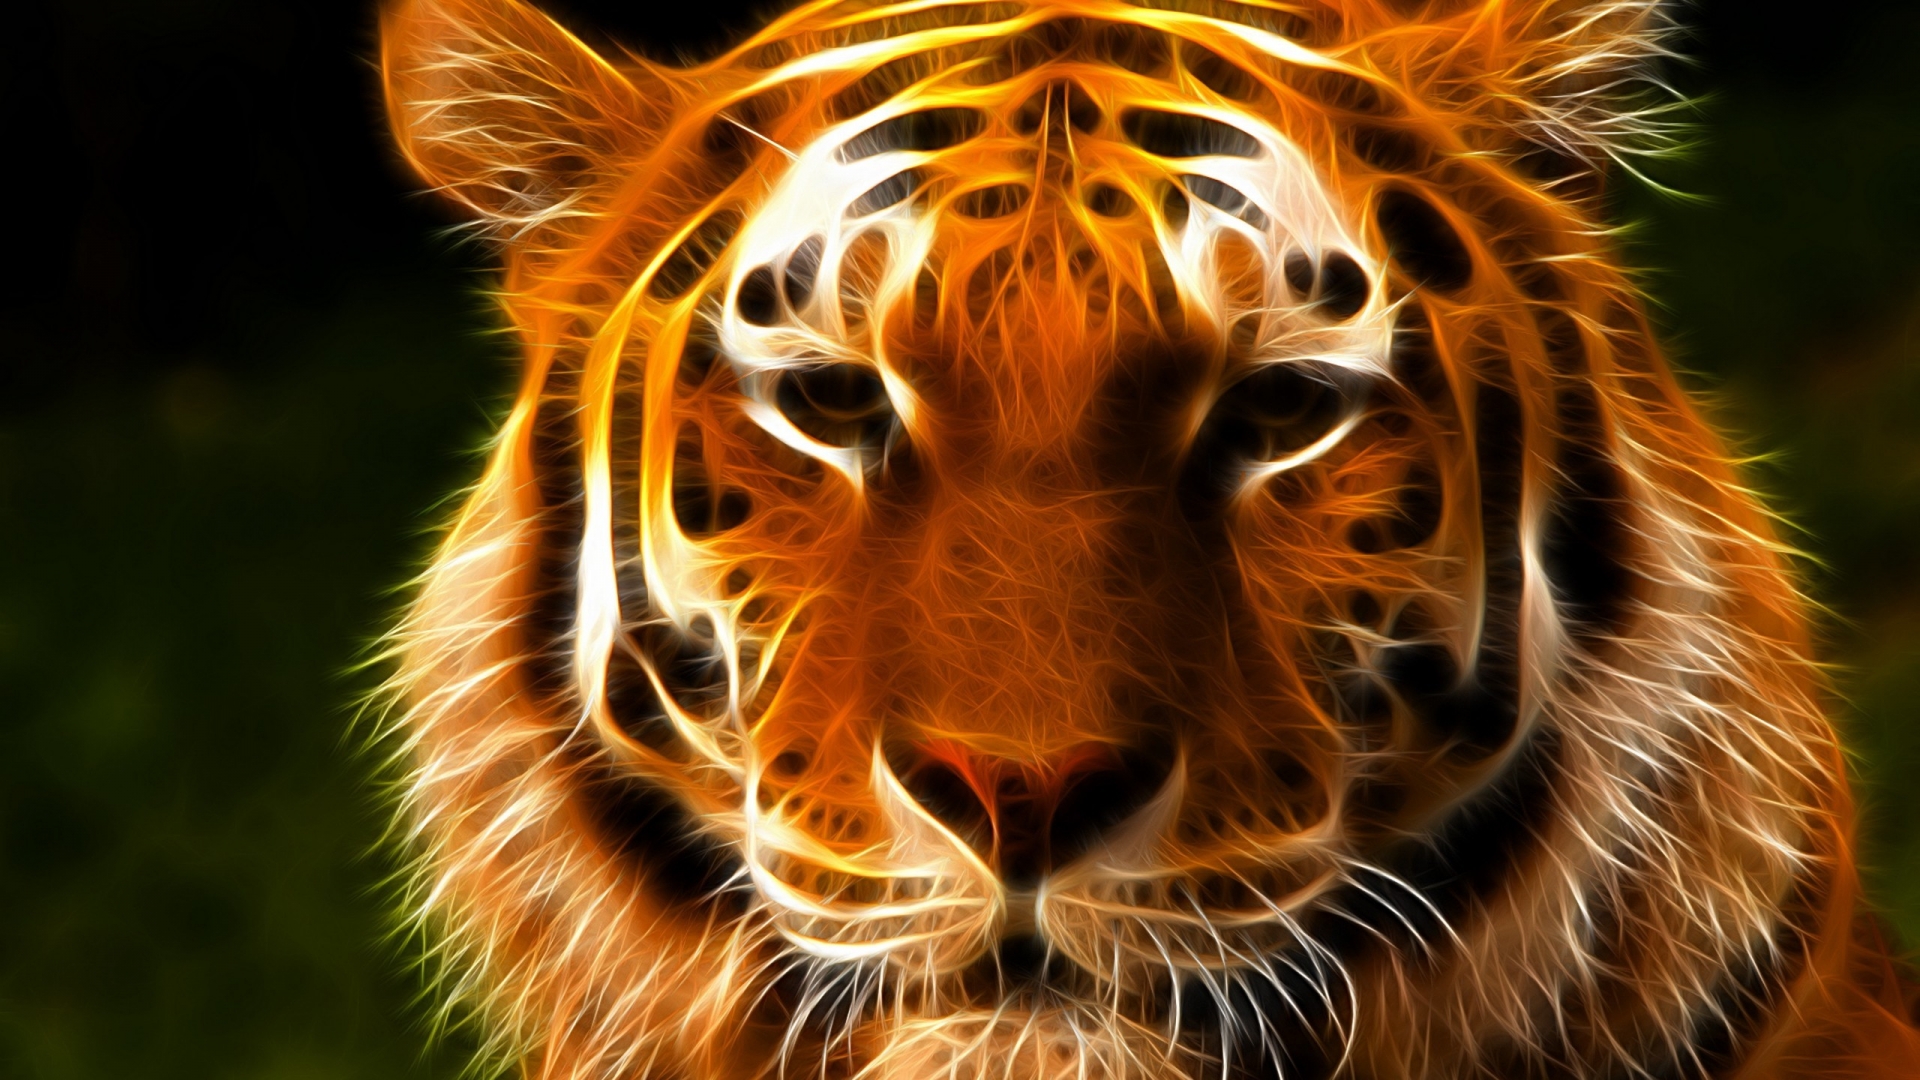 Tiger Face Art for 1920 x 1080 HDTV 1080p resolution